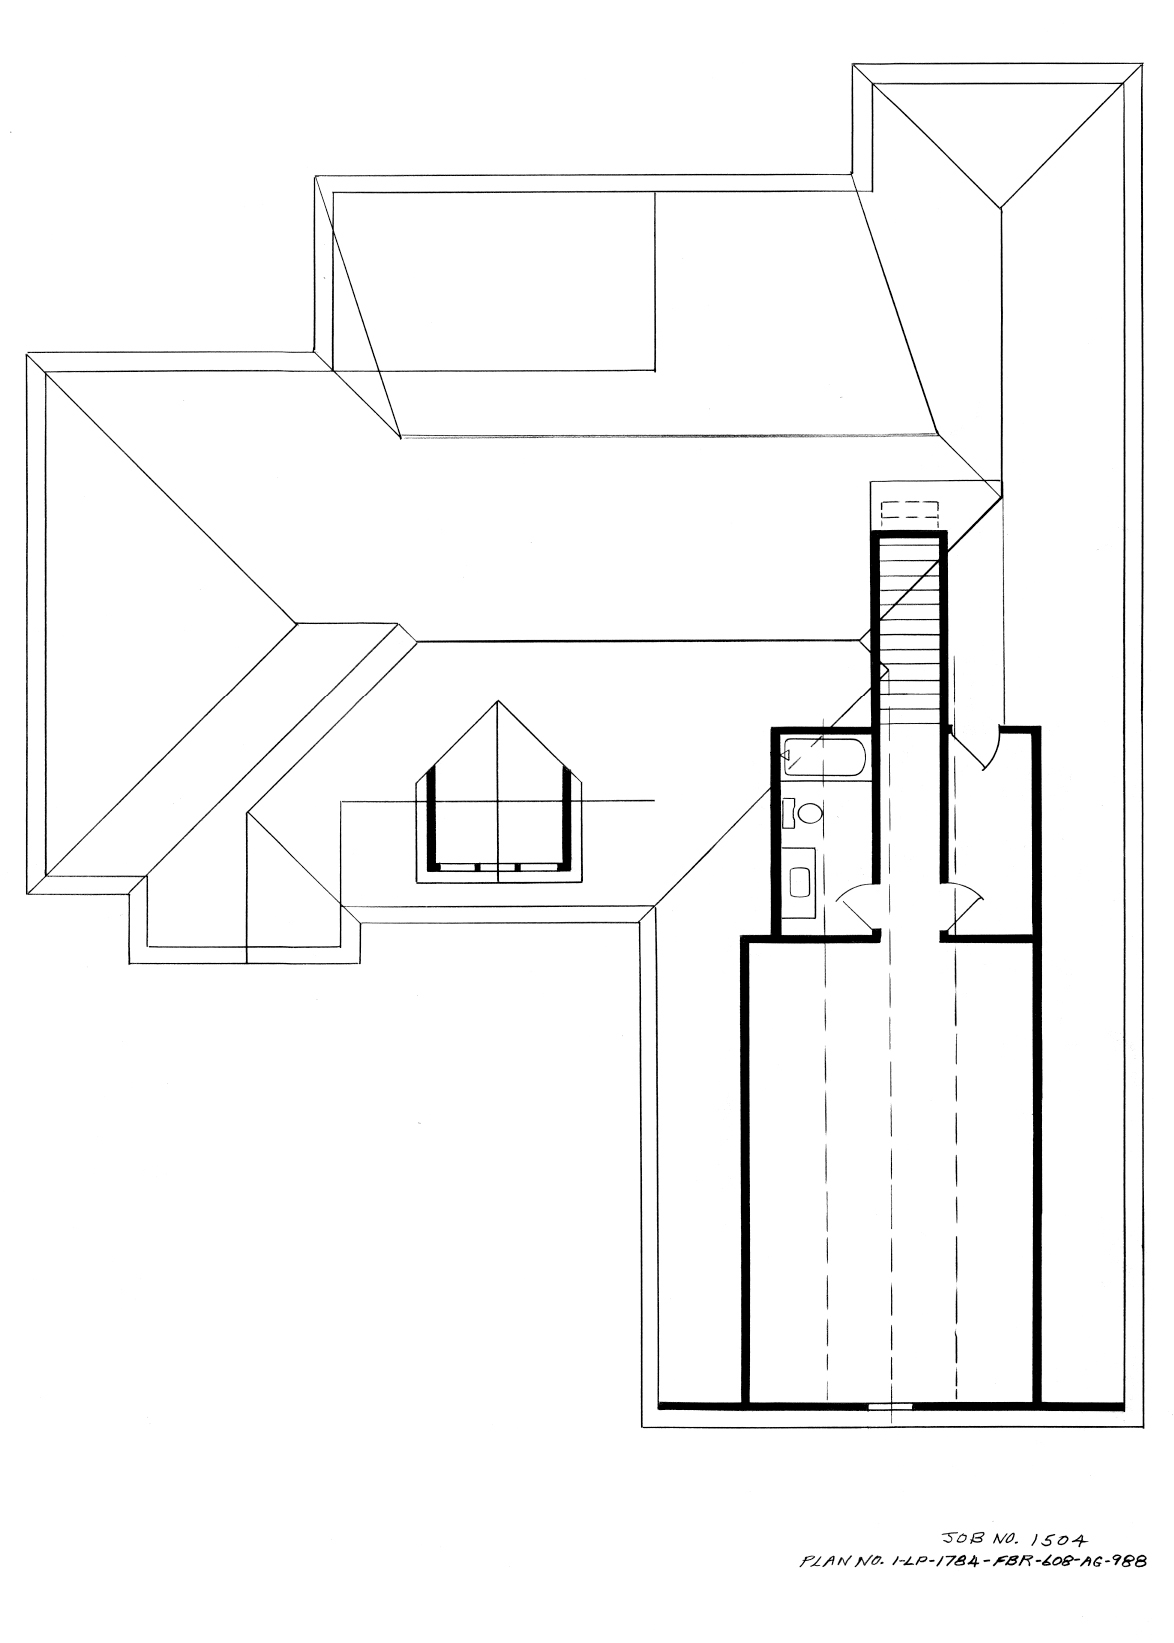 floor-plan-1504-2.jpg